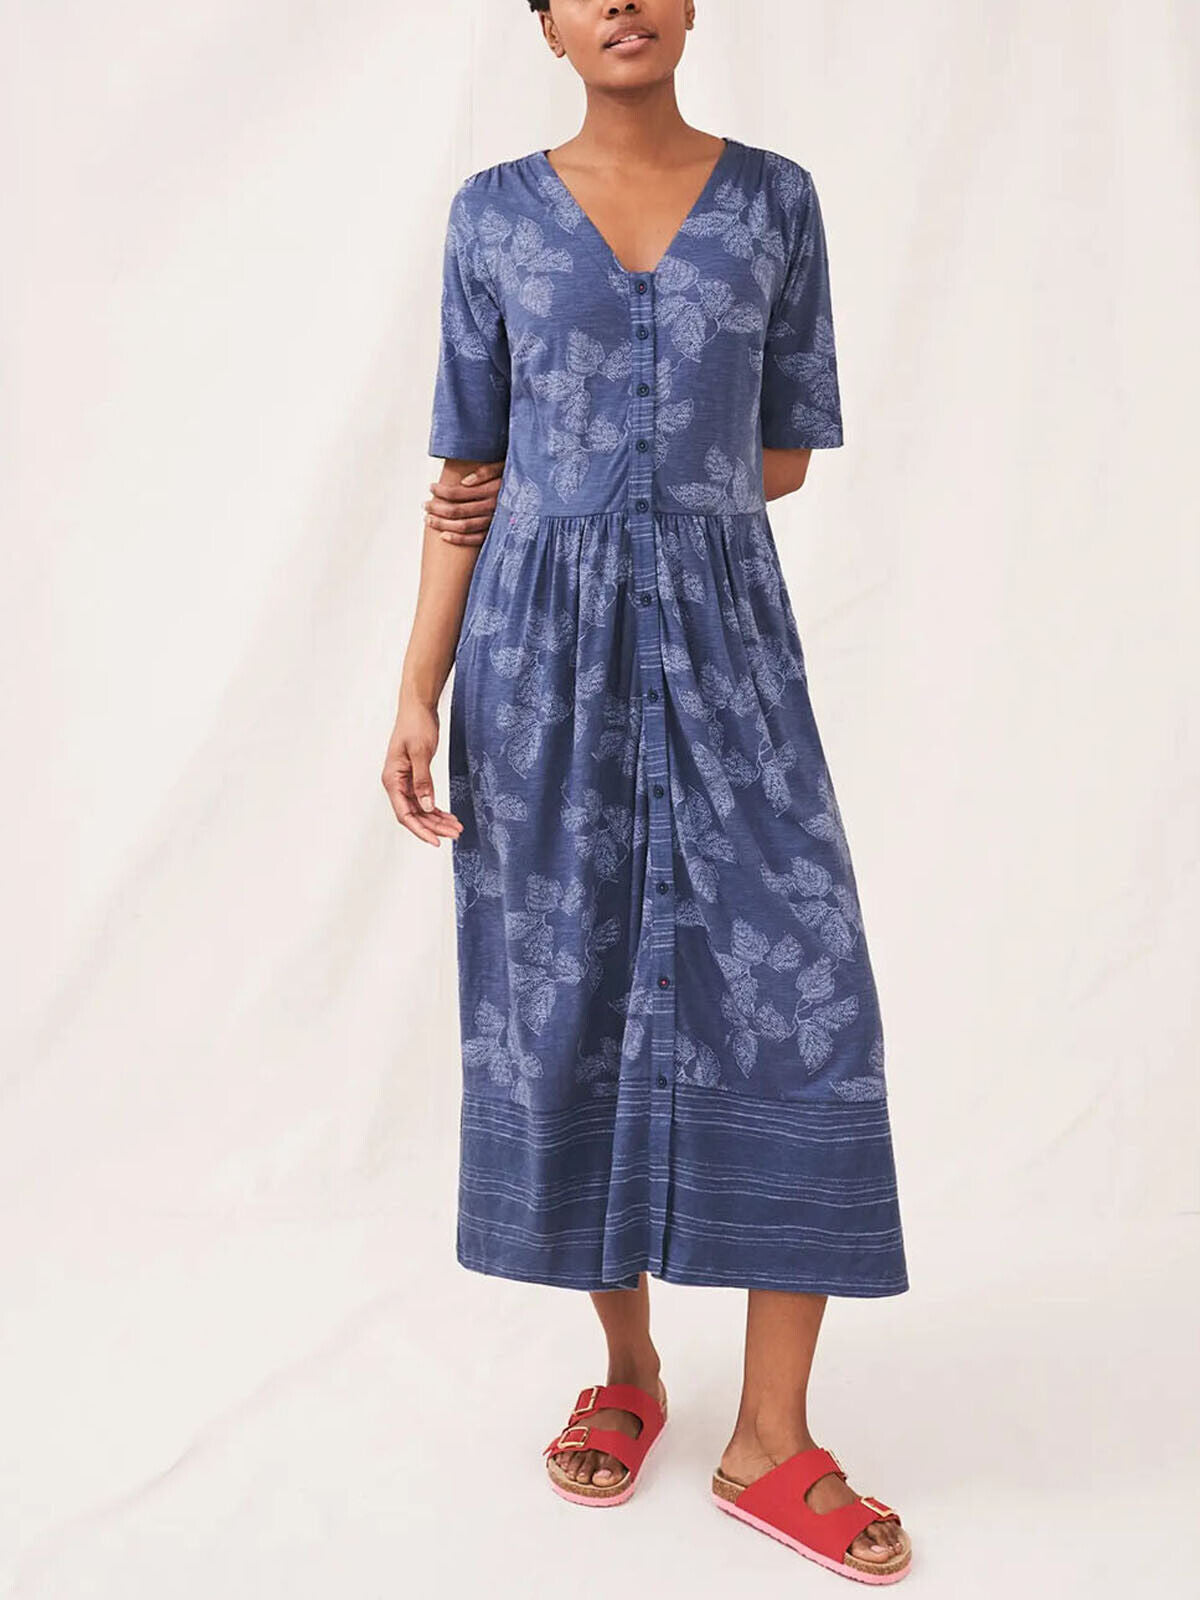 EX WHITE STUFF Blue Mia Cotton Jersey Dress in Sizes 8 10 12 14 16 18 RRP £59